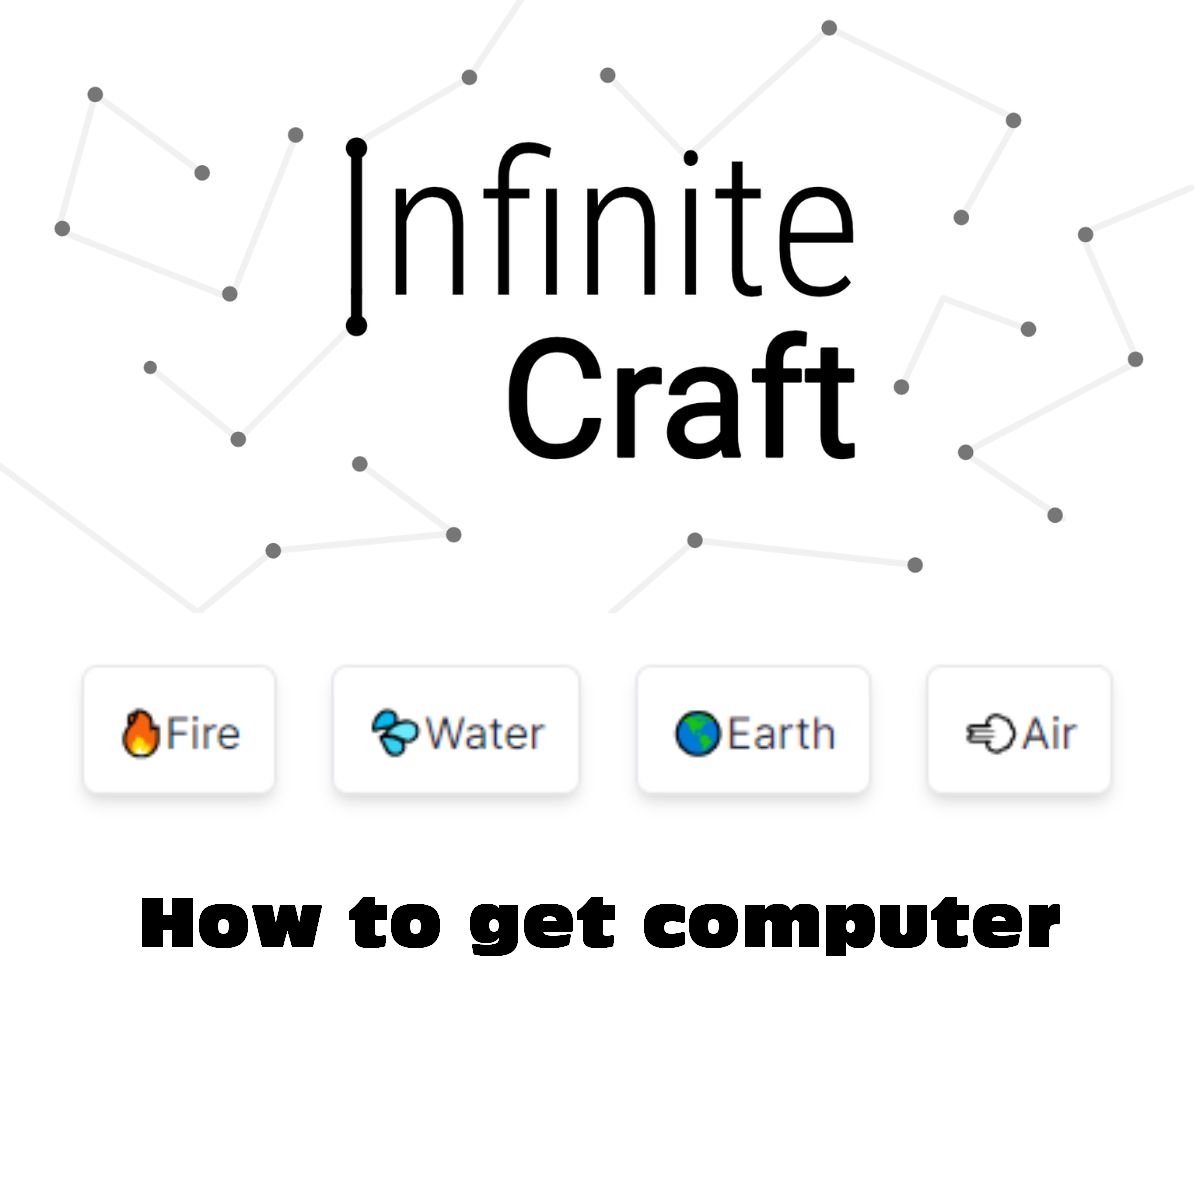 how to get computer in infinite craft